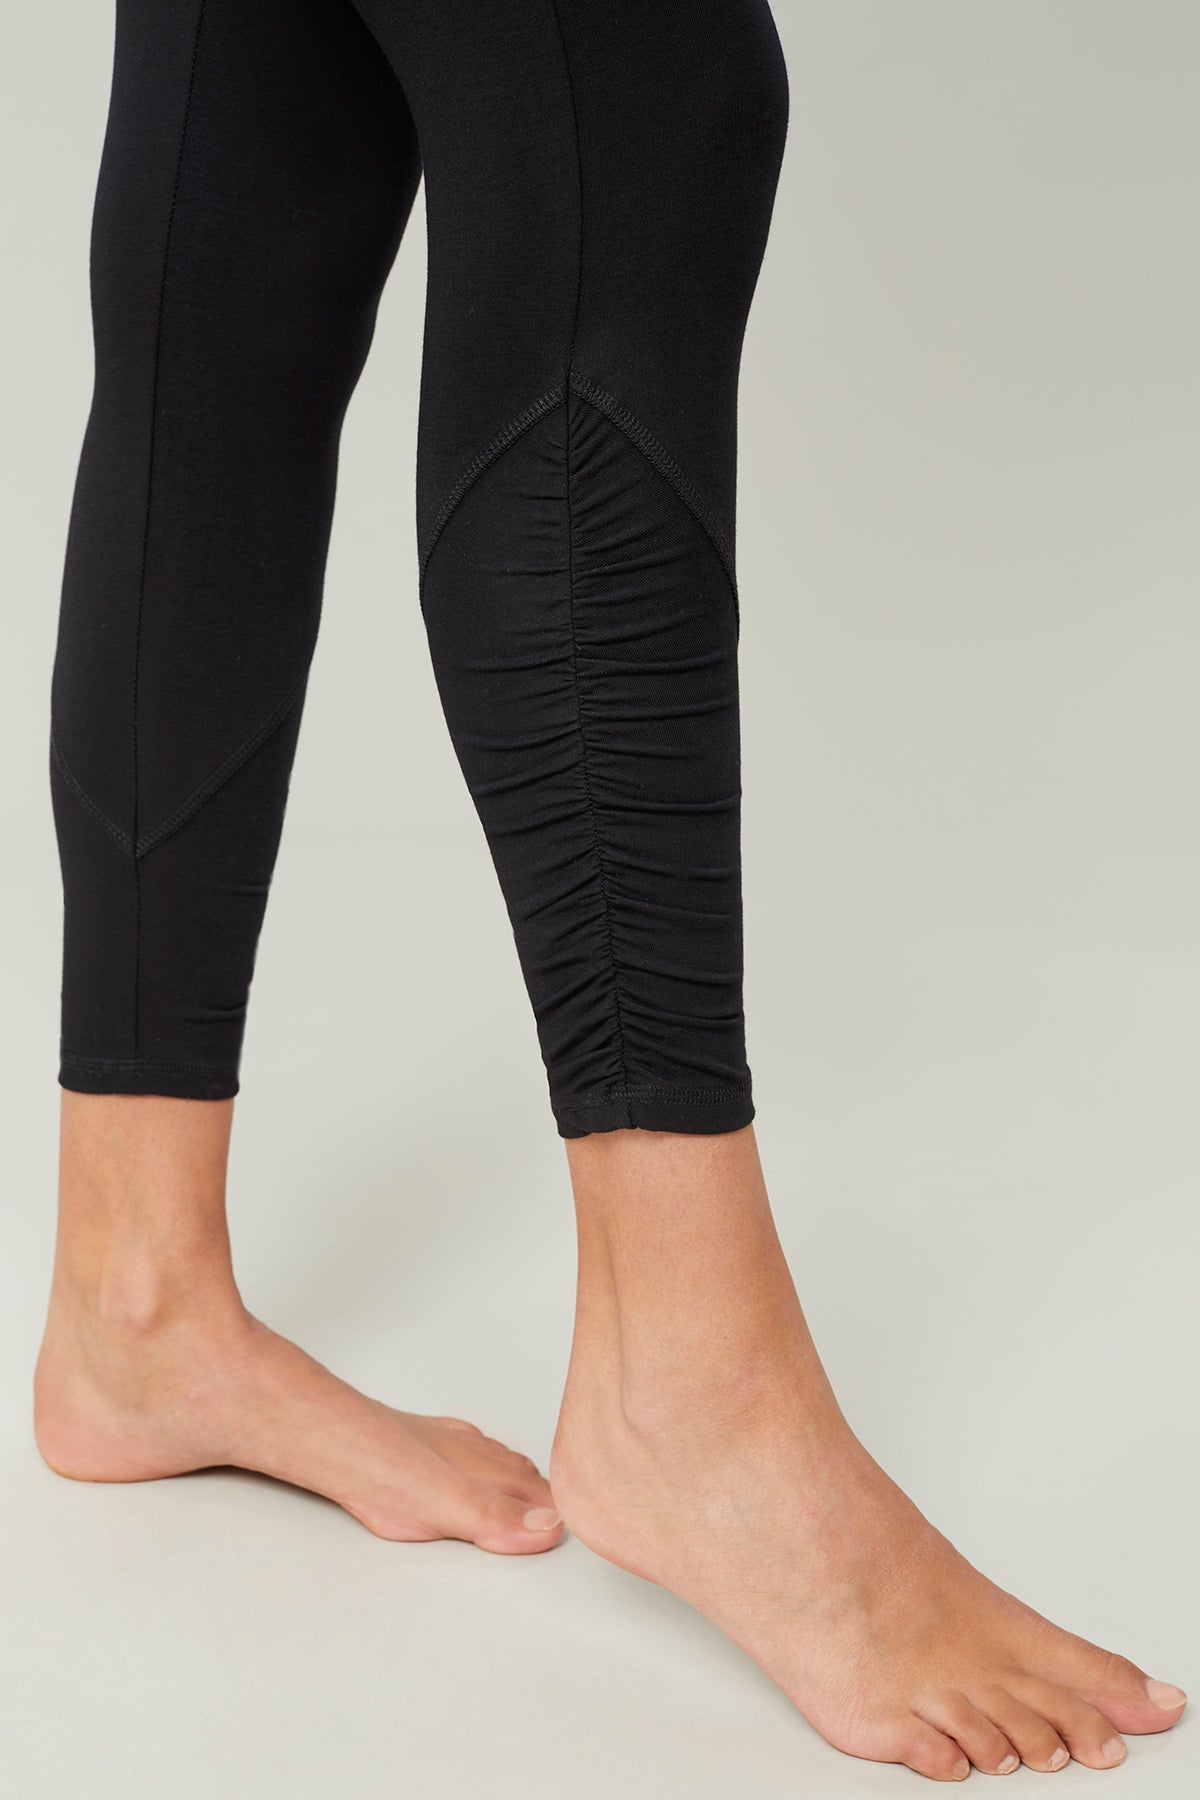 Mandala Yoga Legging Schwarz Detail - Cropped Ruffle Tights